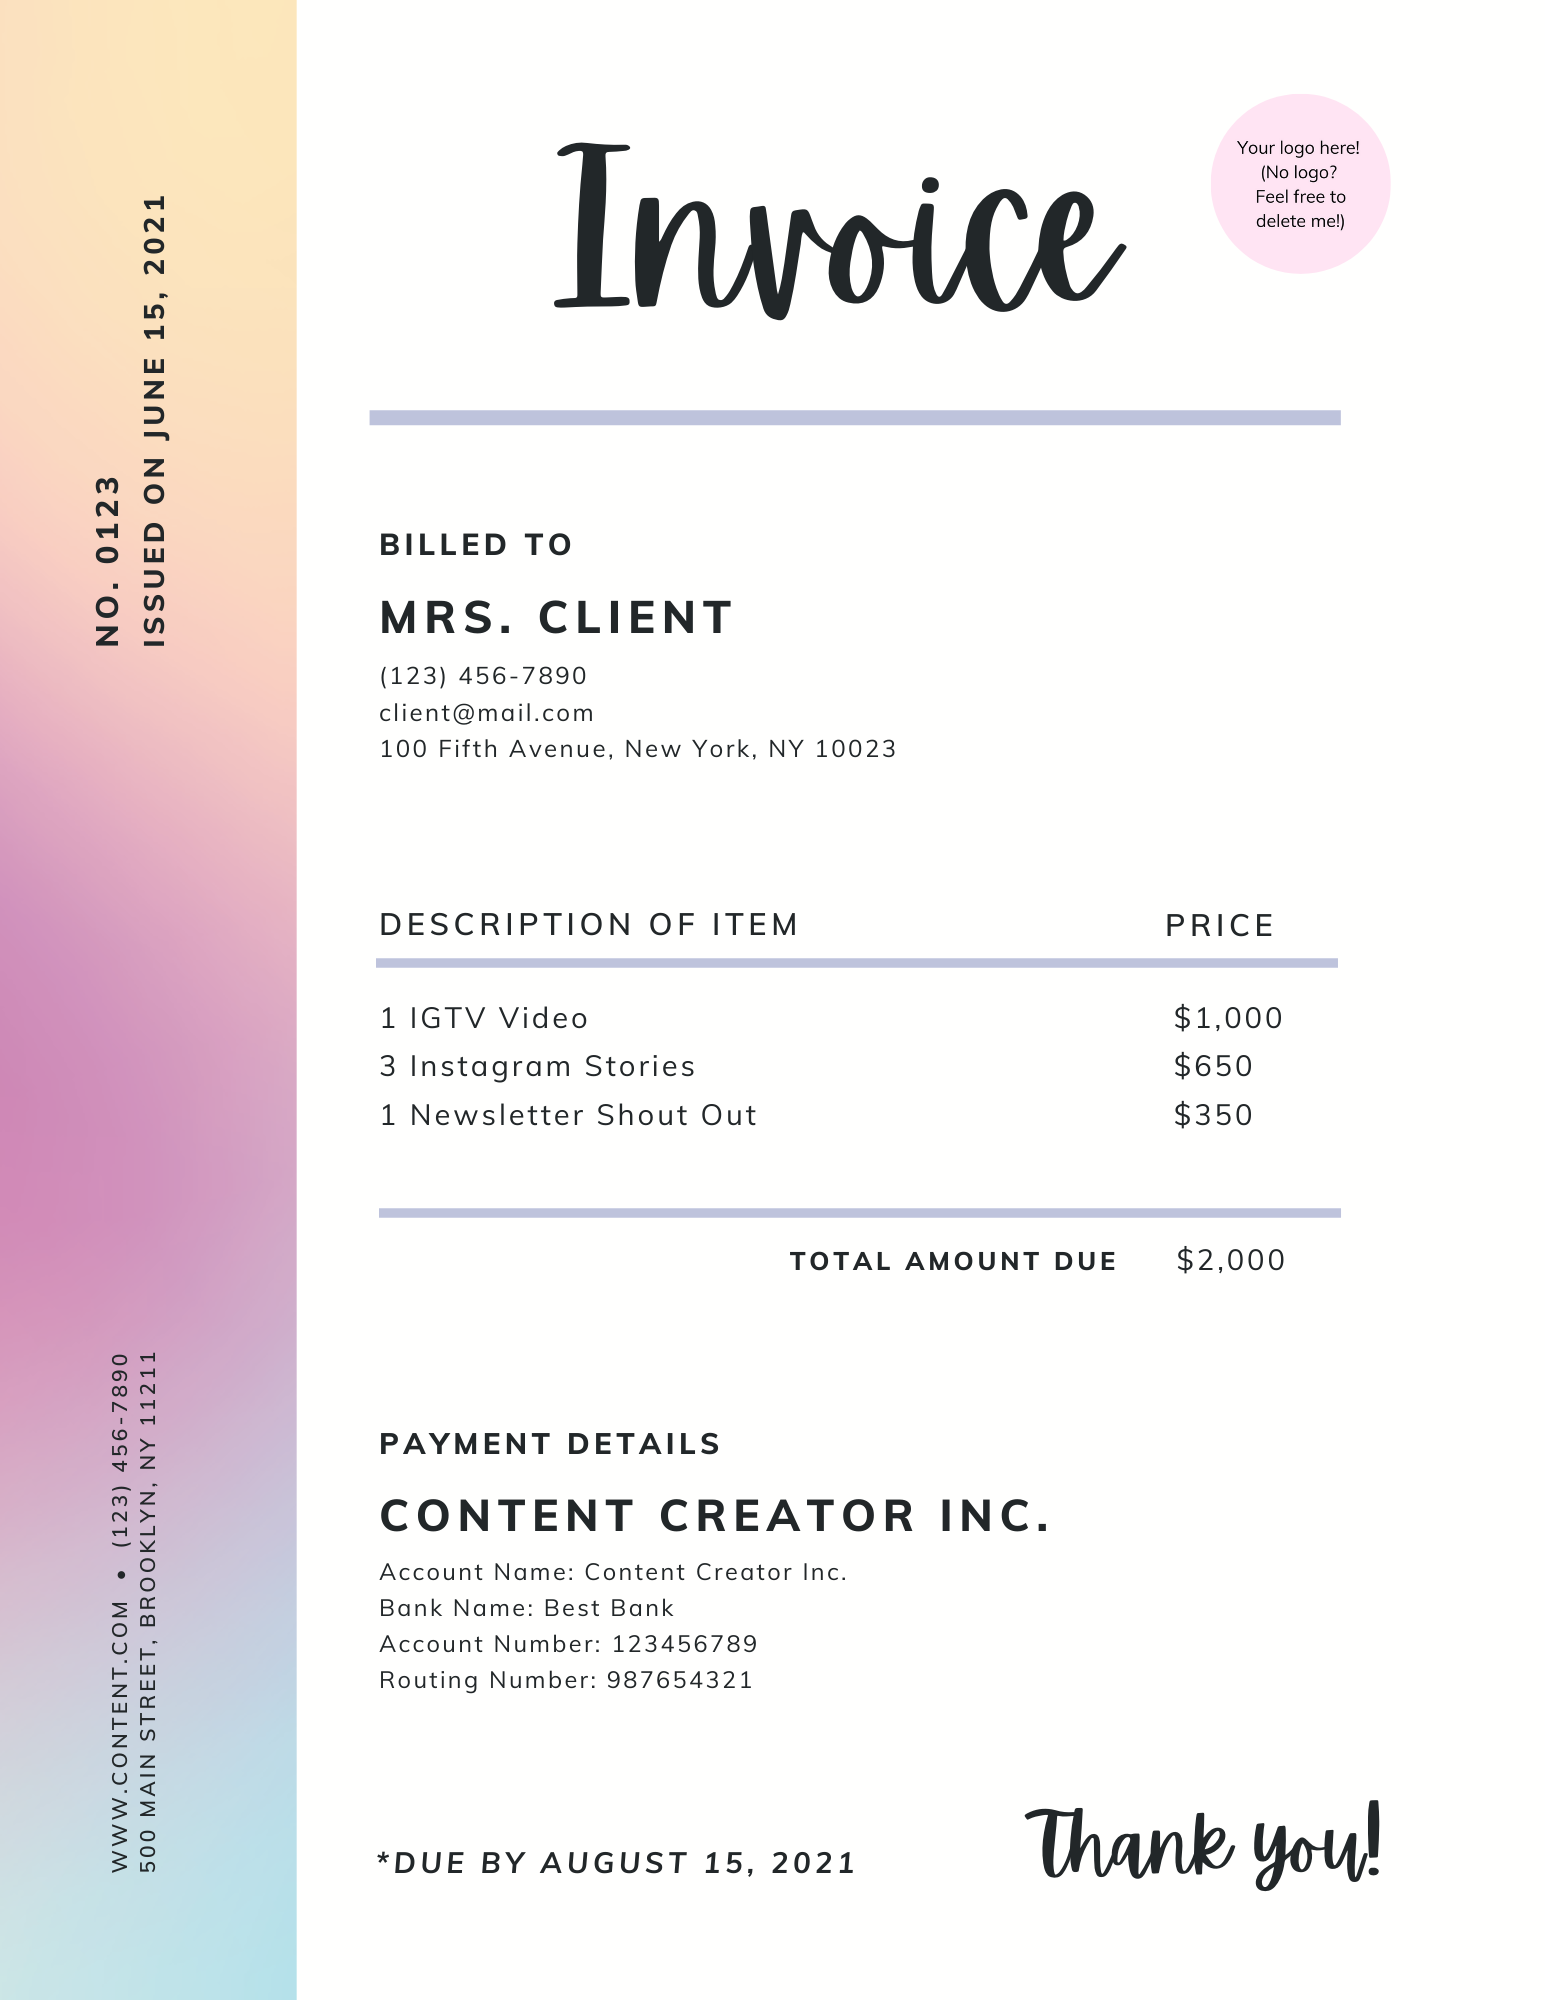 invoice-template-for-bloggers-and-content-creators-austen-tosone